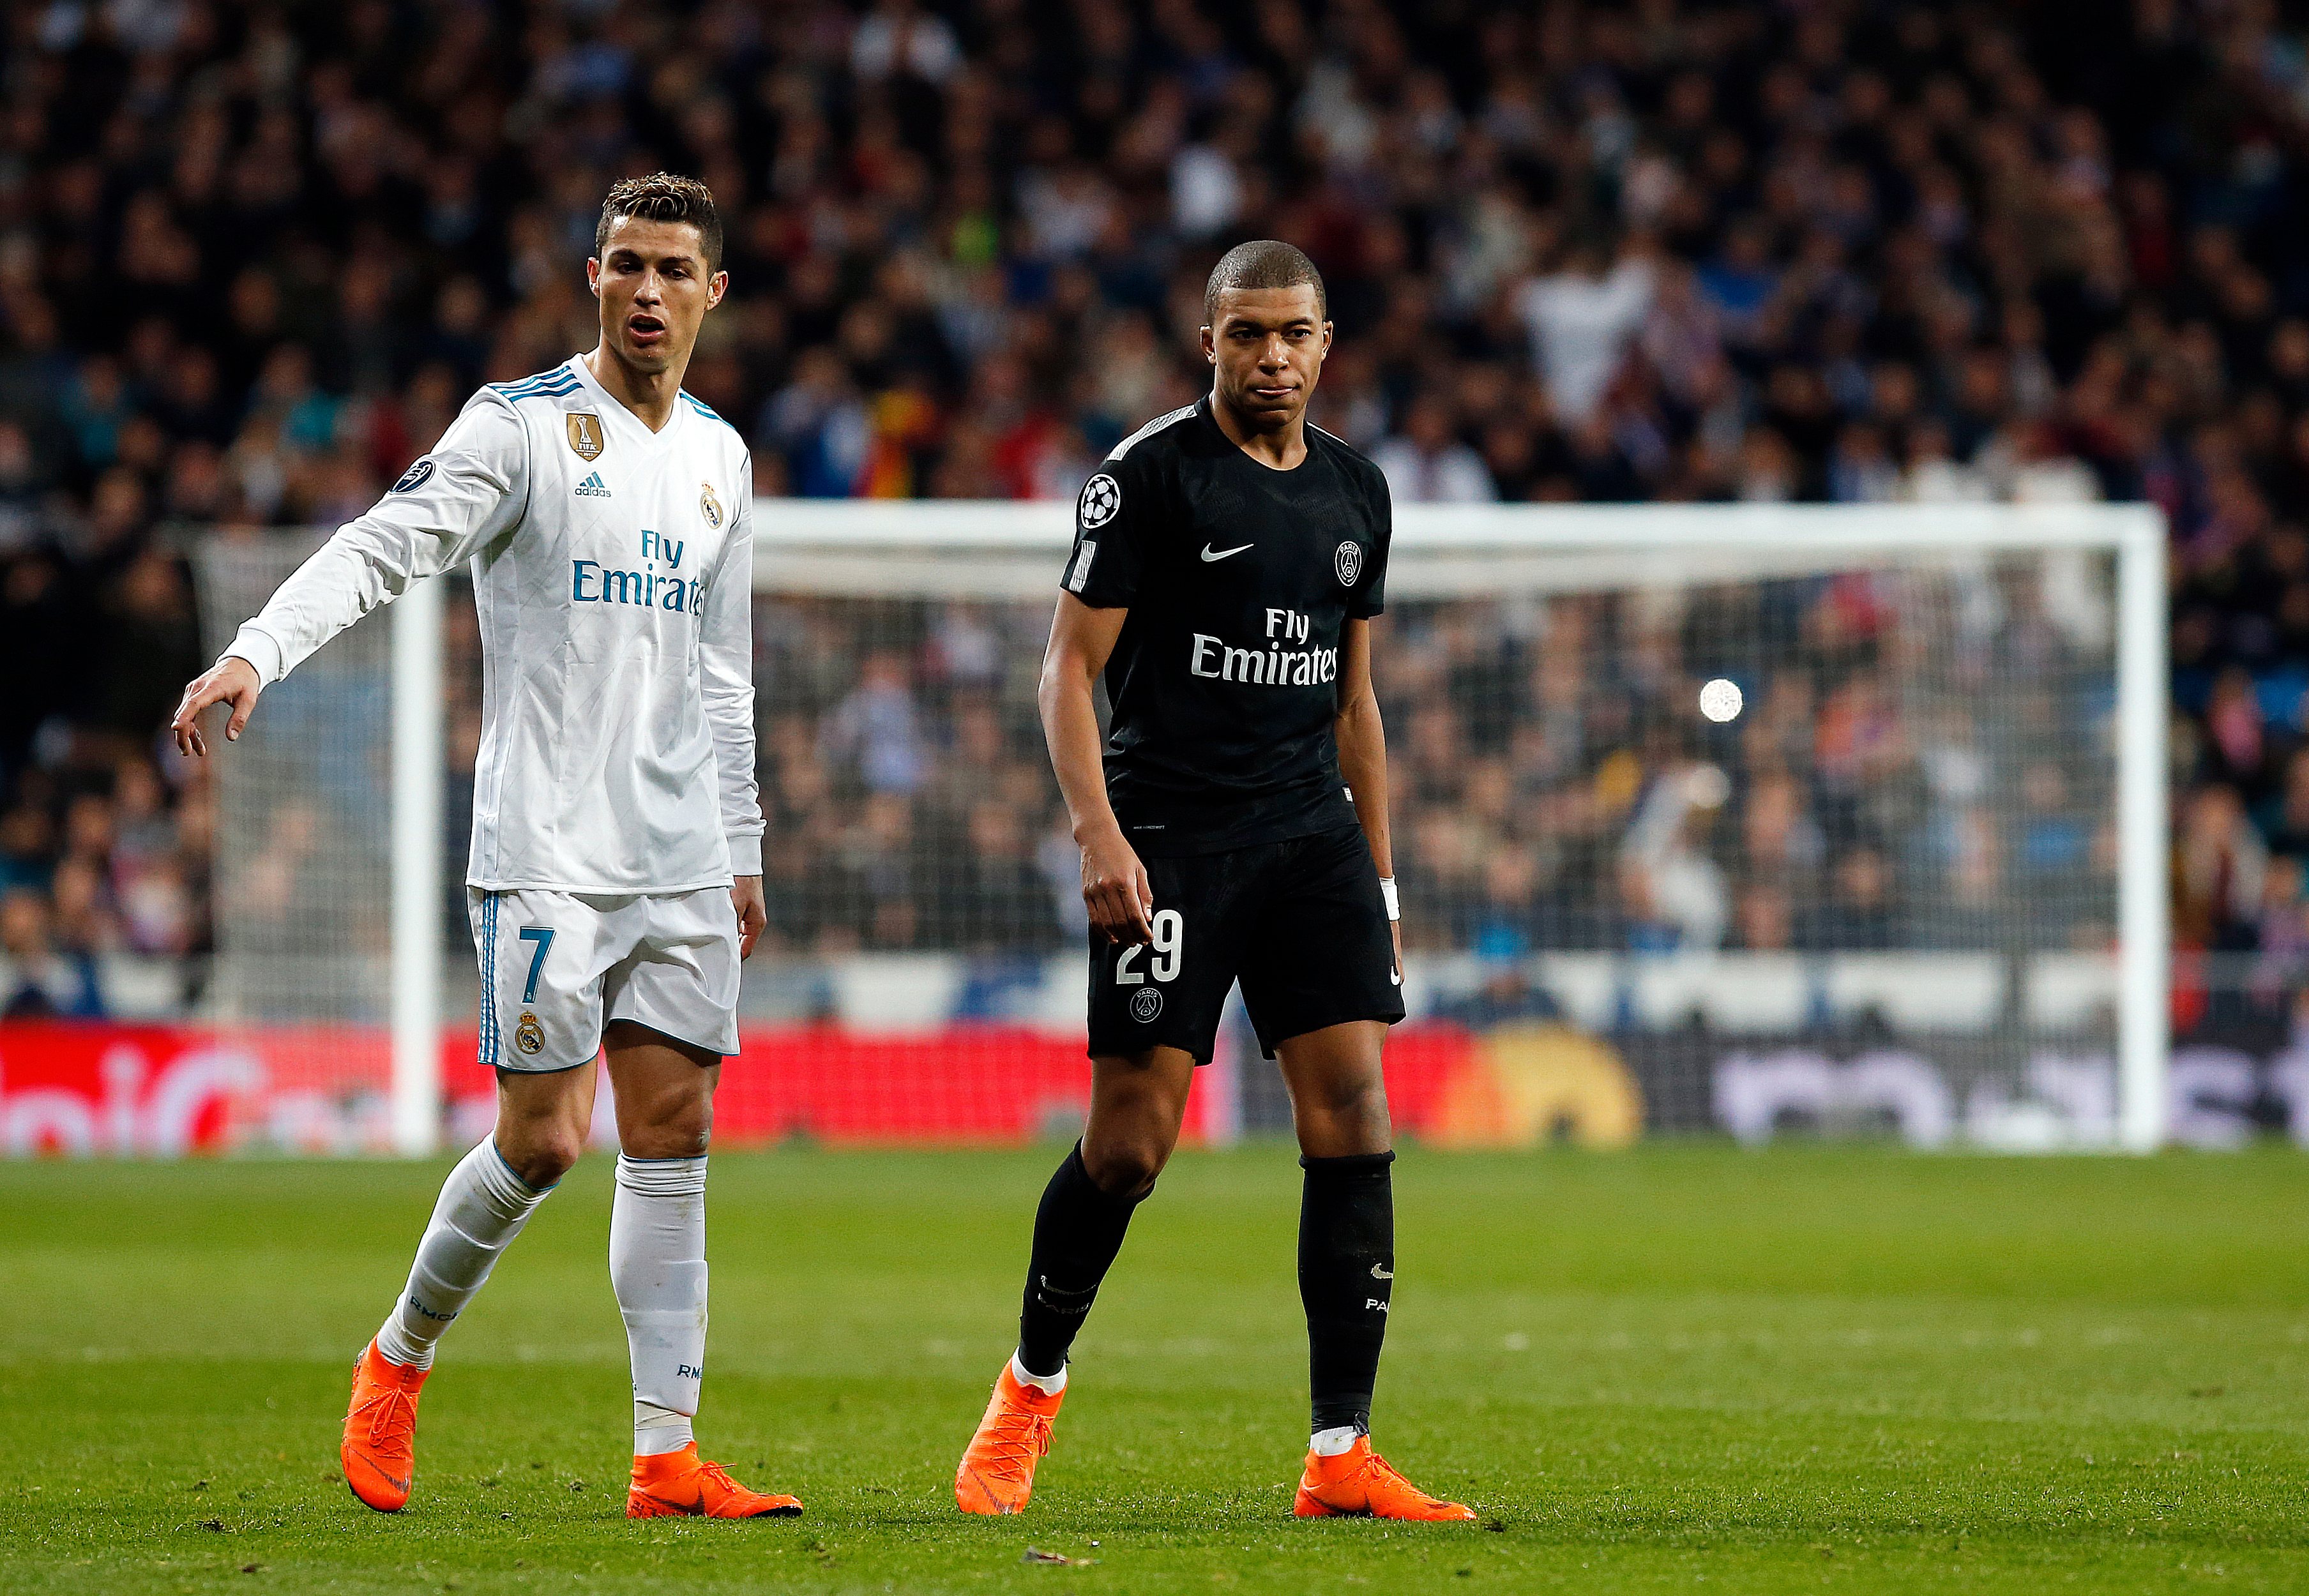 Cristiano Ronaldo (Real Madrid) and Kylian Mbappe (Paris